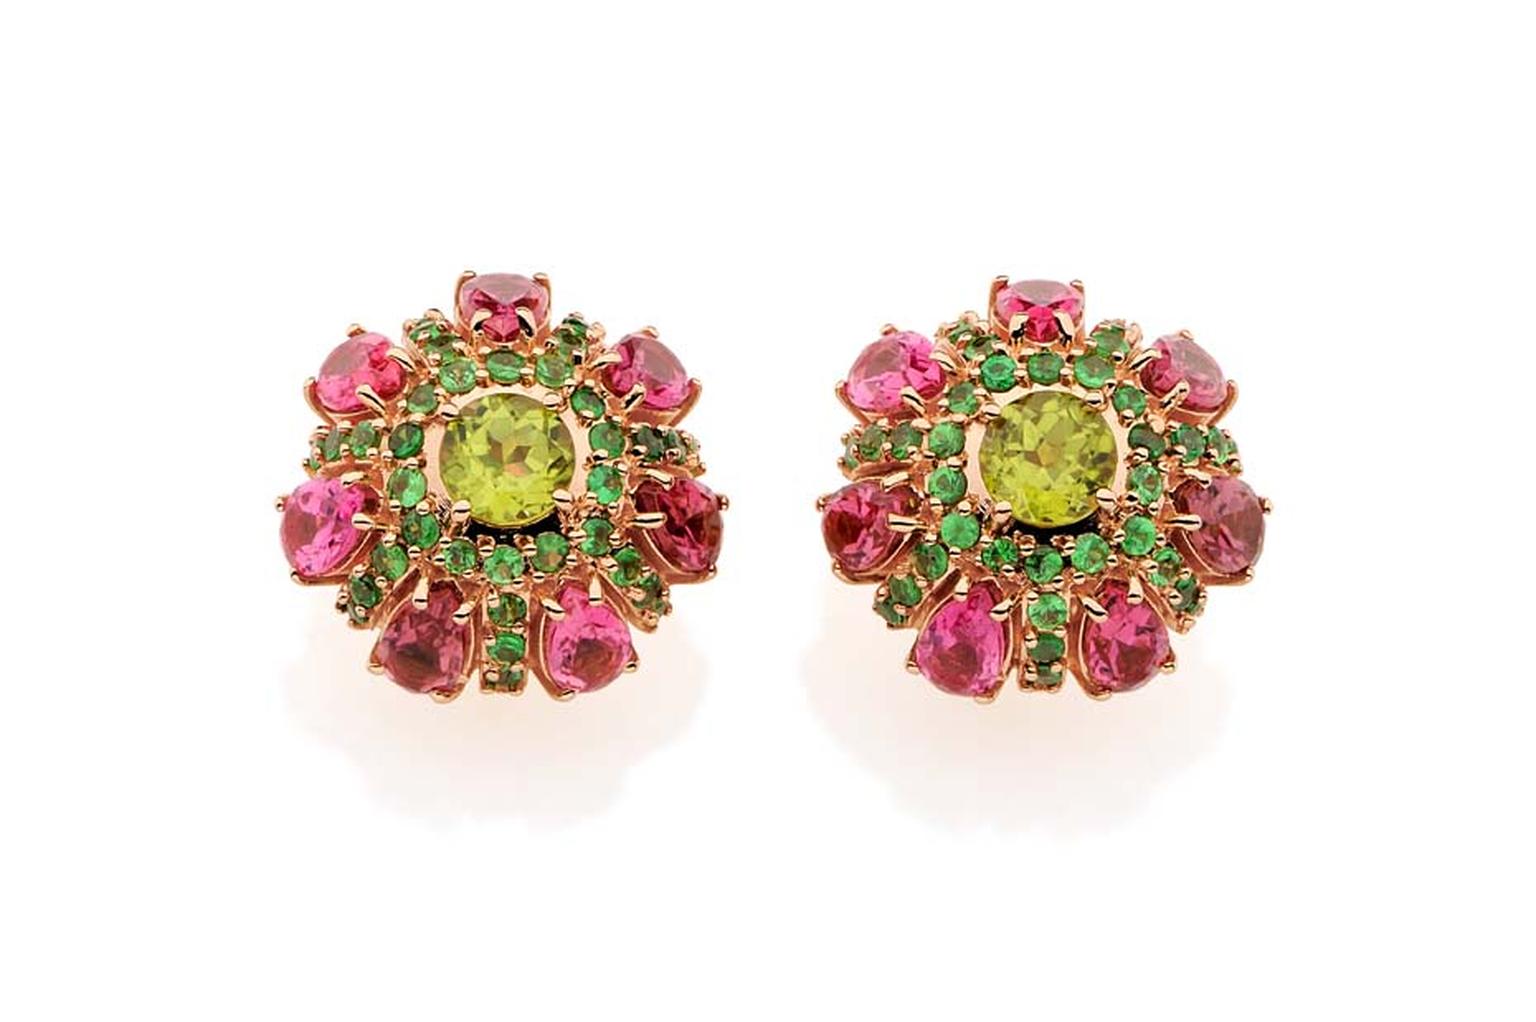 Carla Amorim rose gold Vitral earrings with peridot, tsavorite and pink tourmaline.